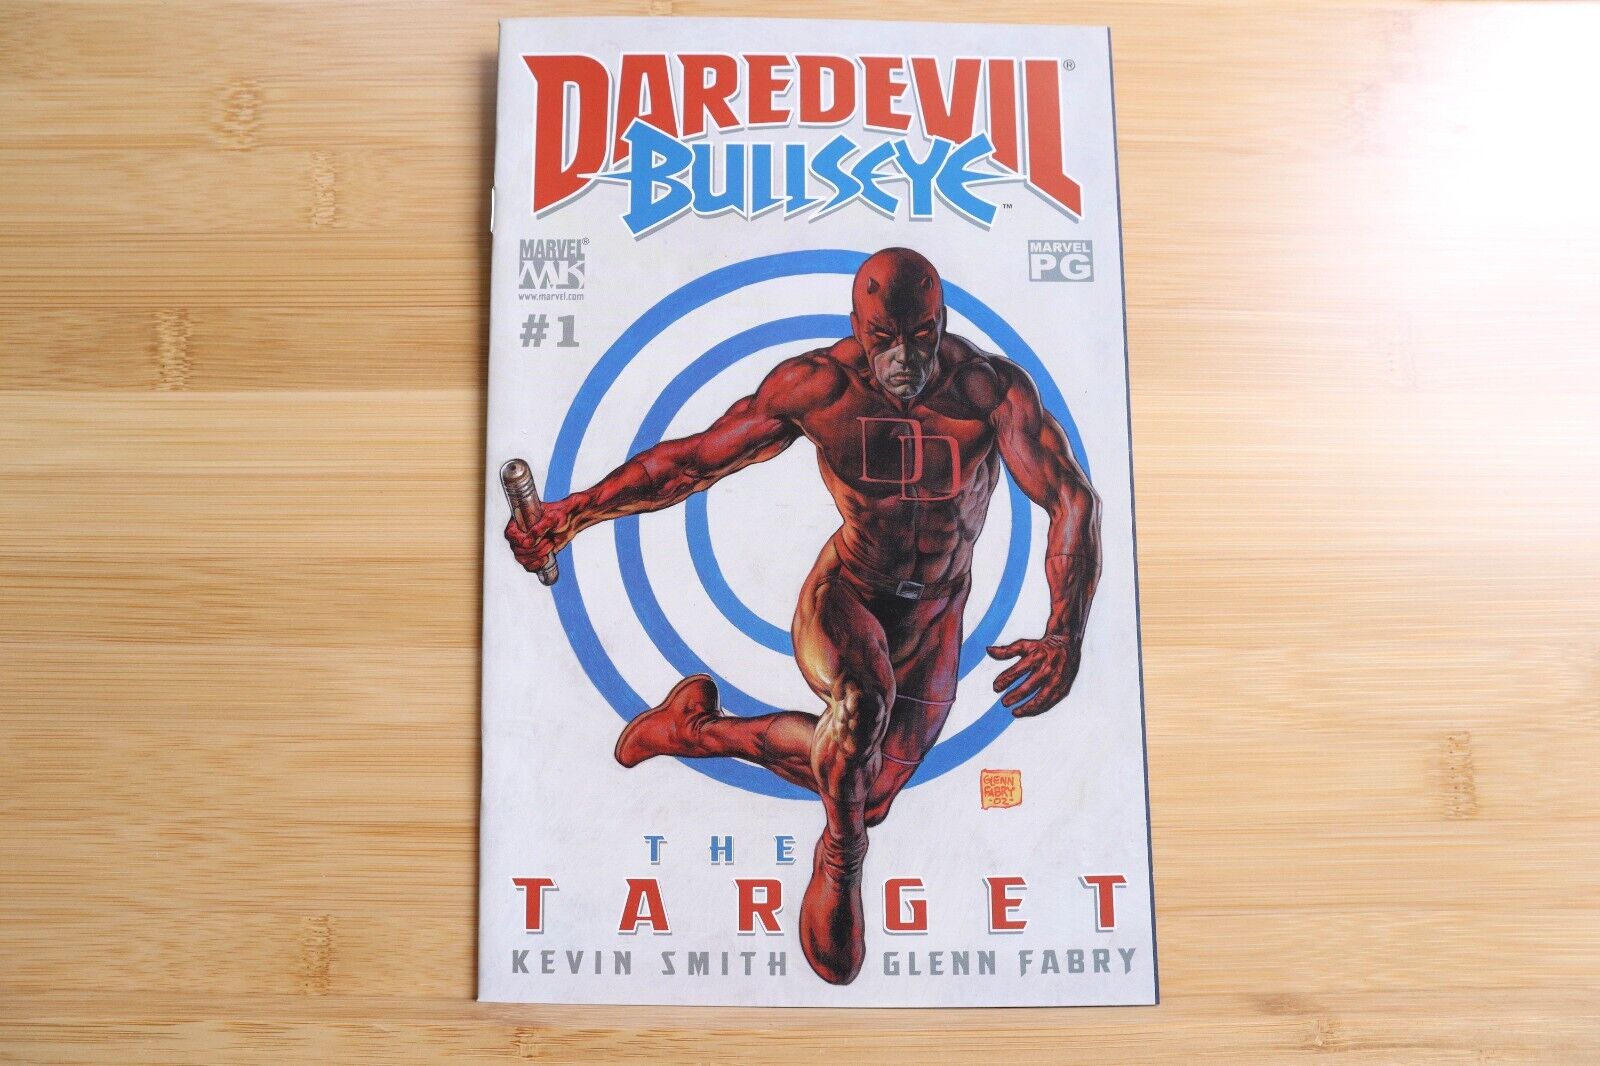 Daredevil Bullseye: The Target #1 Kevin Smith Glenn Fabry Marvel MK VF/NM - 2003